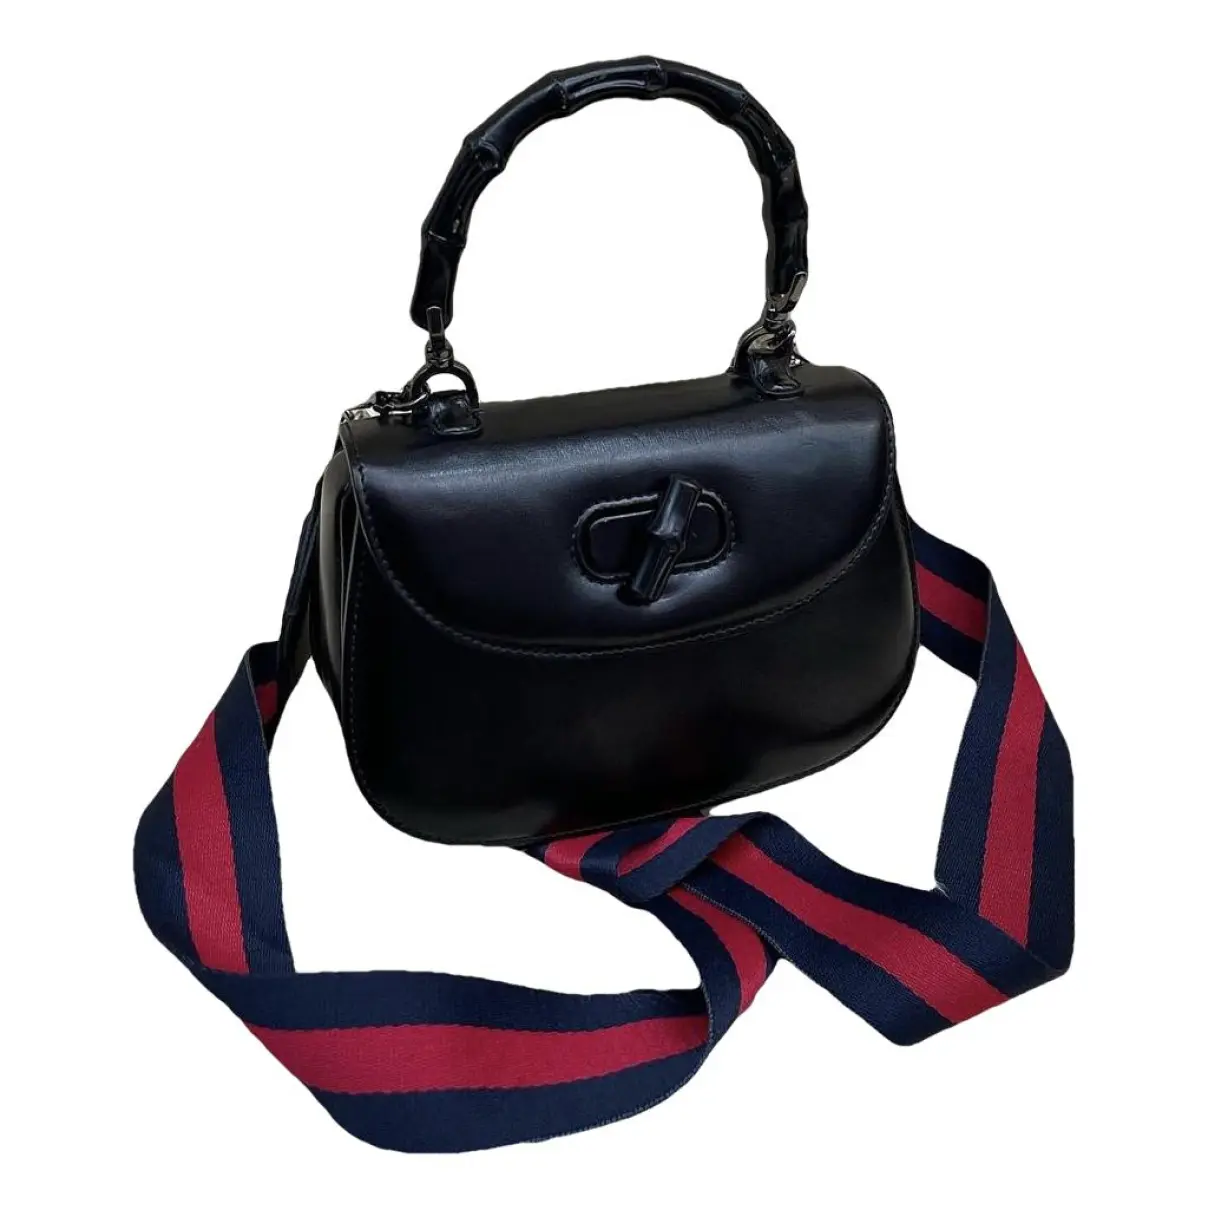 Convertible Bamboo Top Handle leather handbag